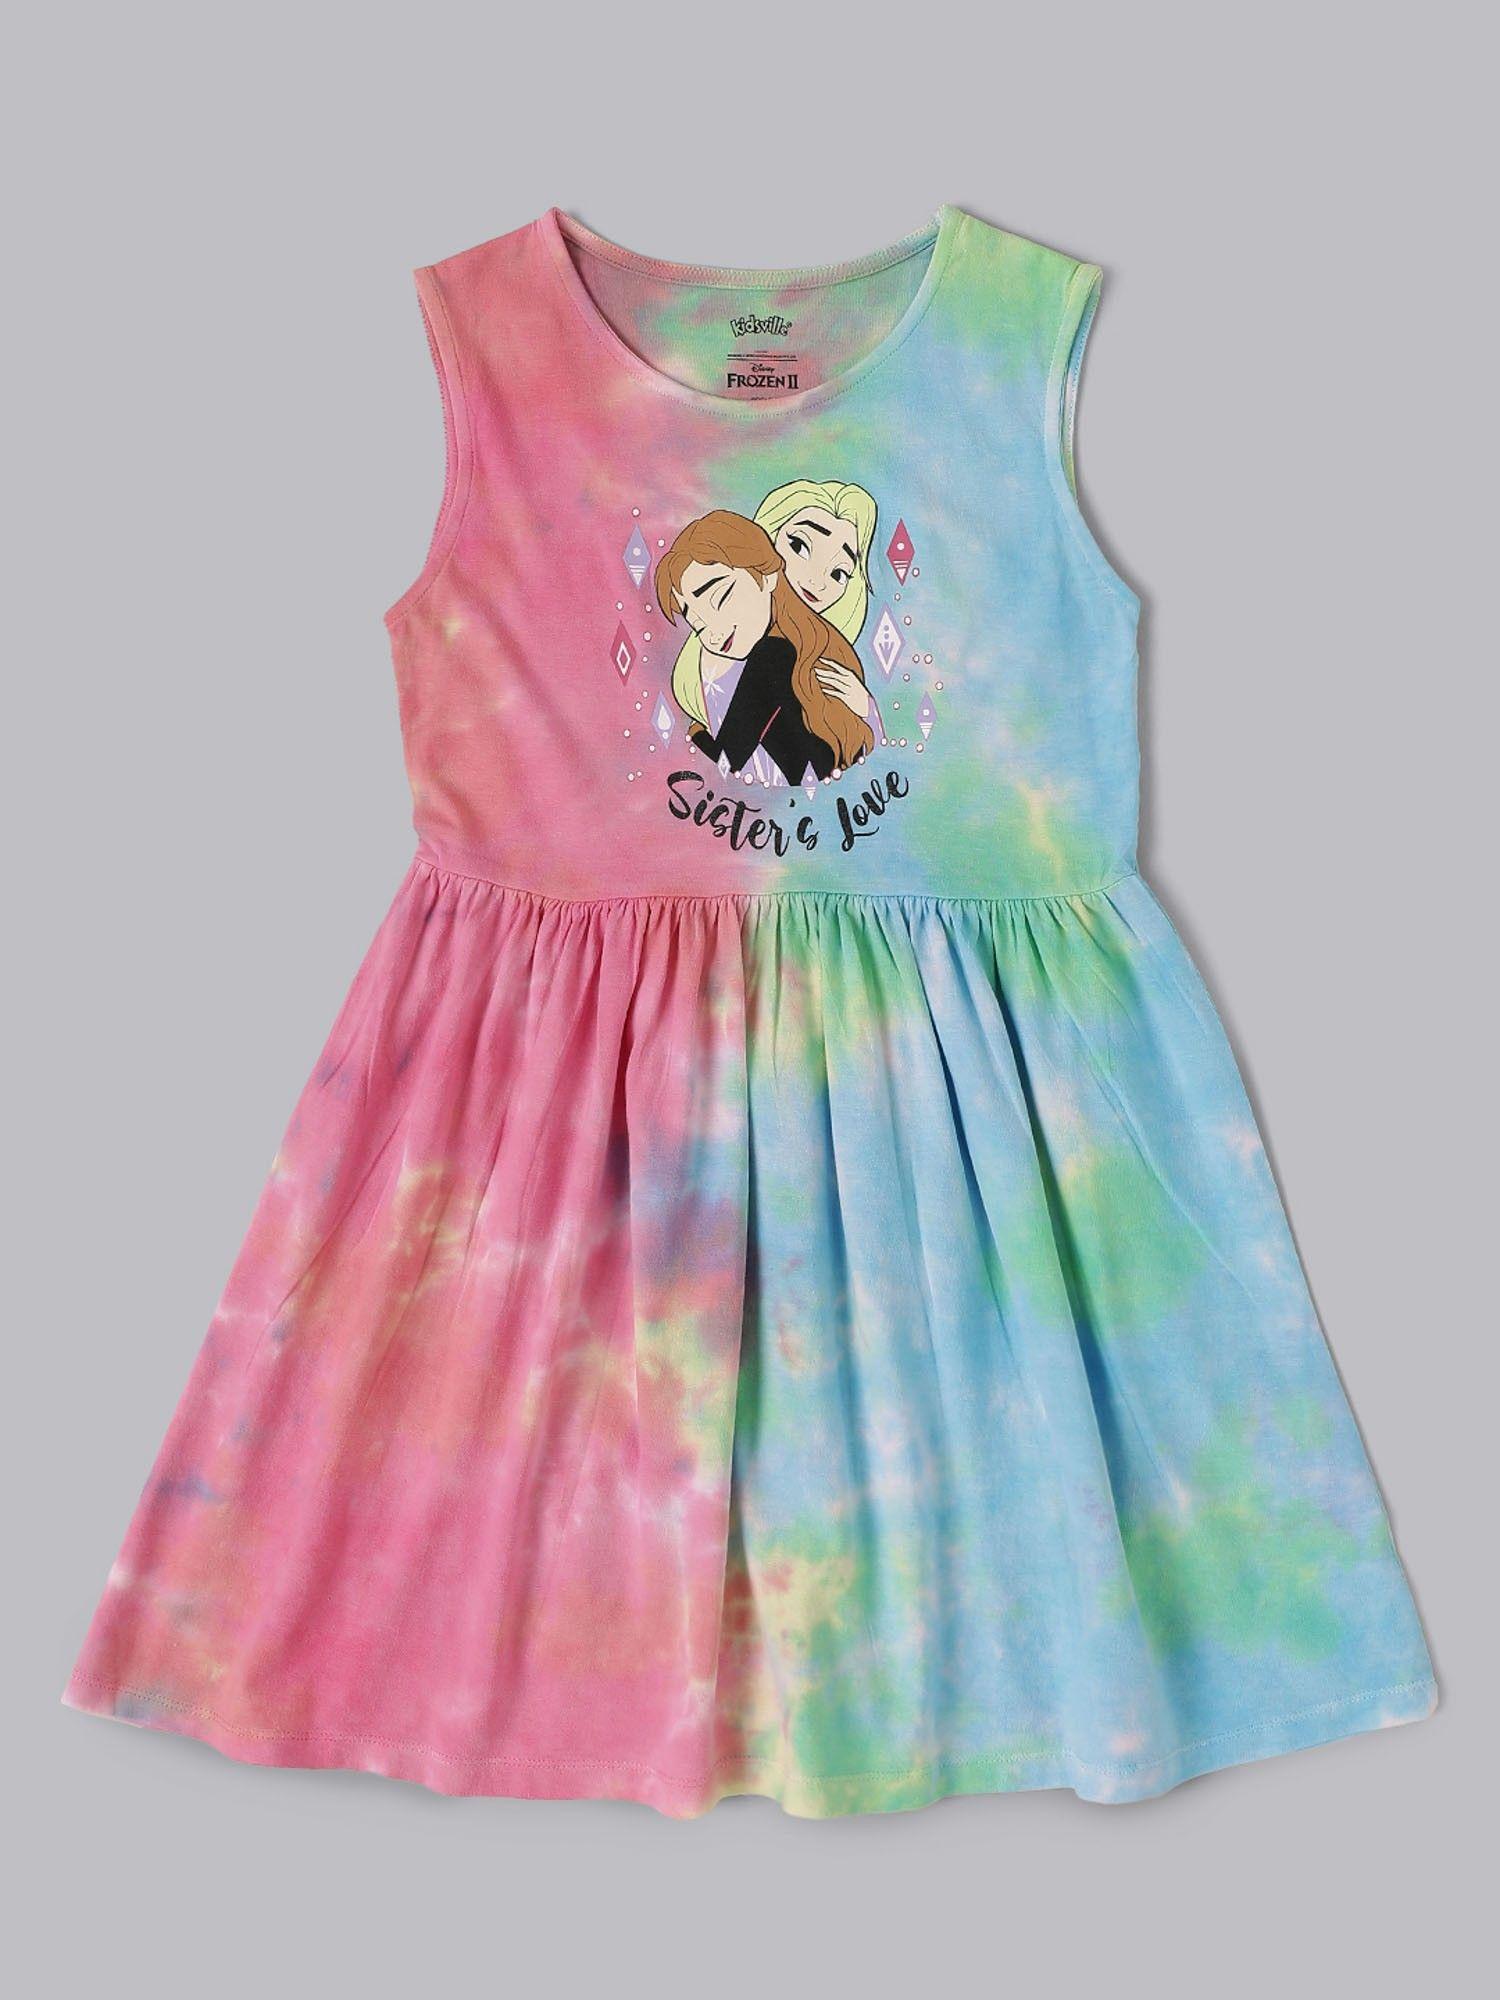 frozen printed dress for kids girls